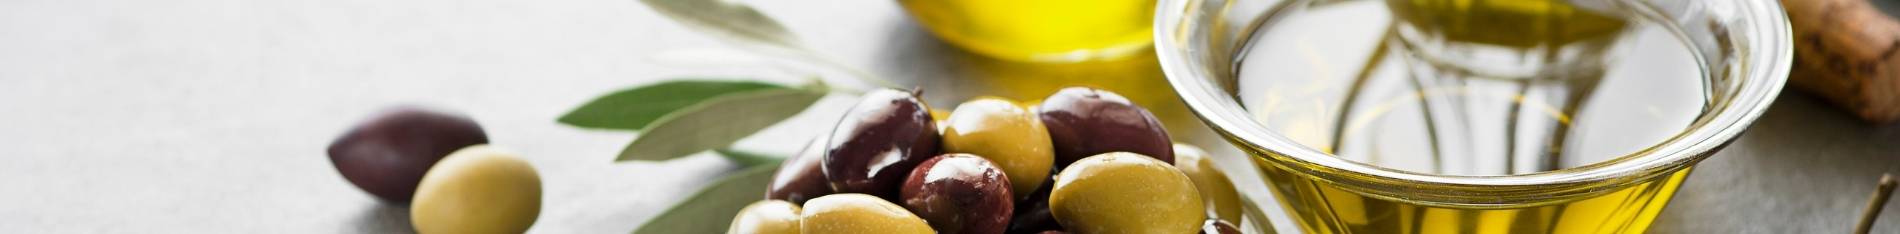 olivenoel der premium klasse